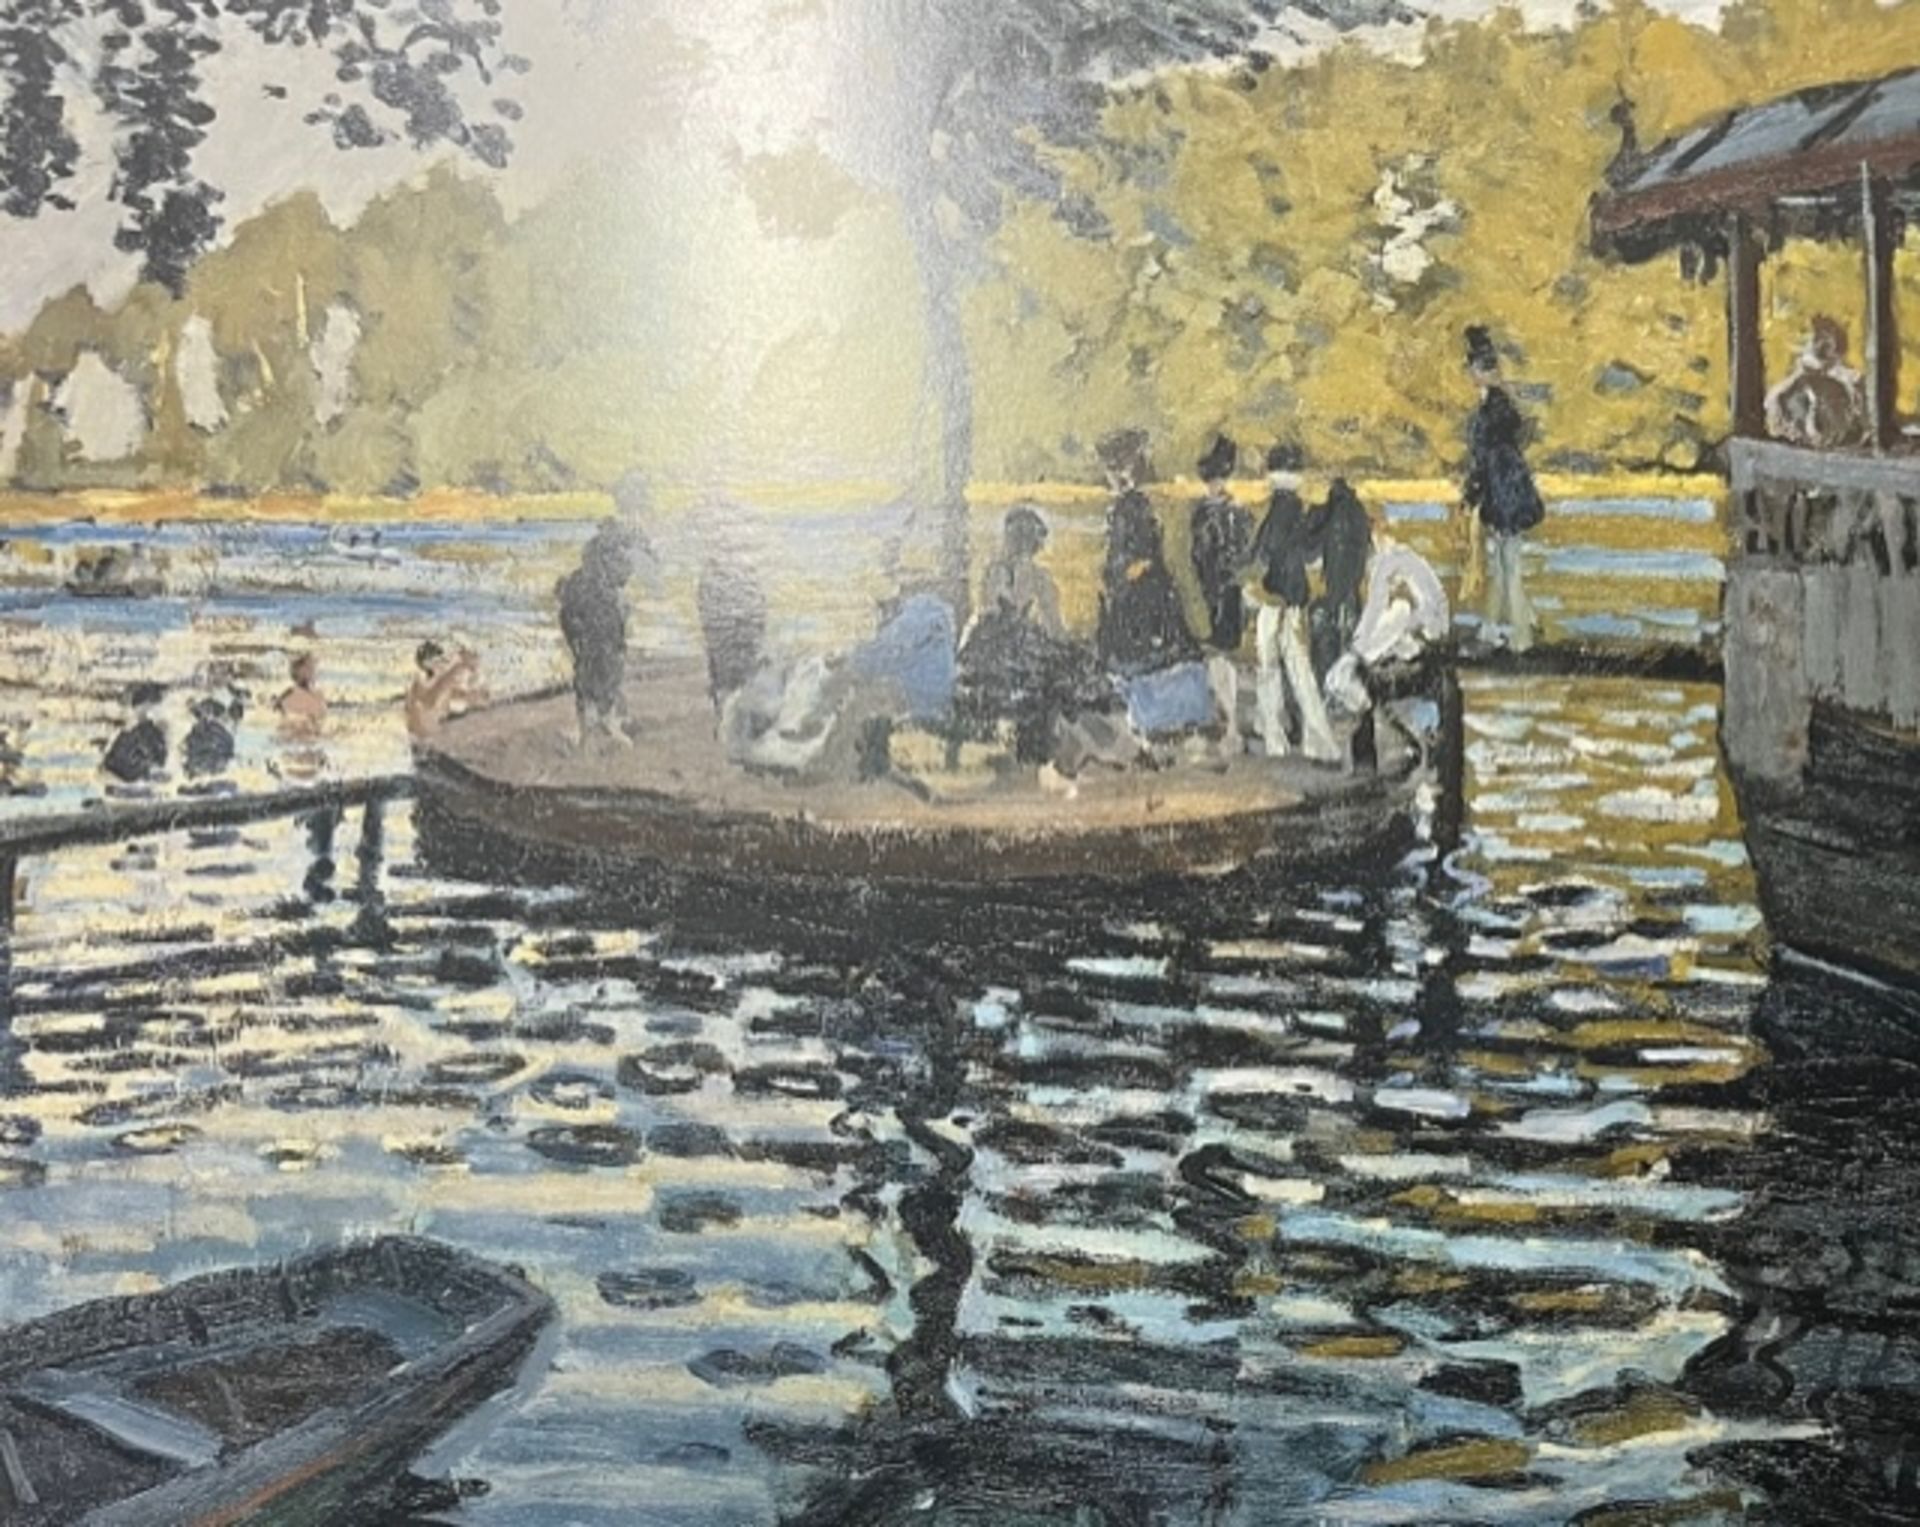 Claude Monet "La Grenouillere" Print.